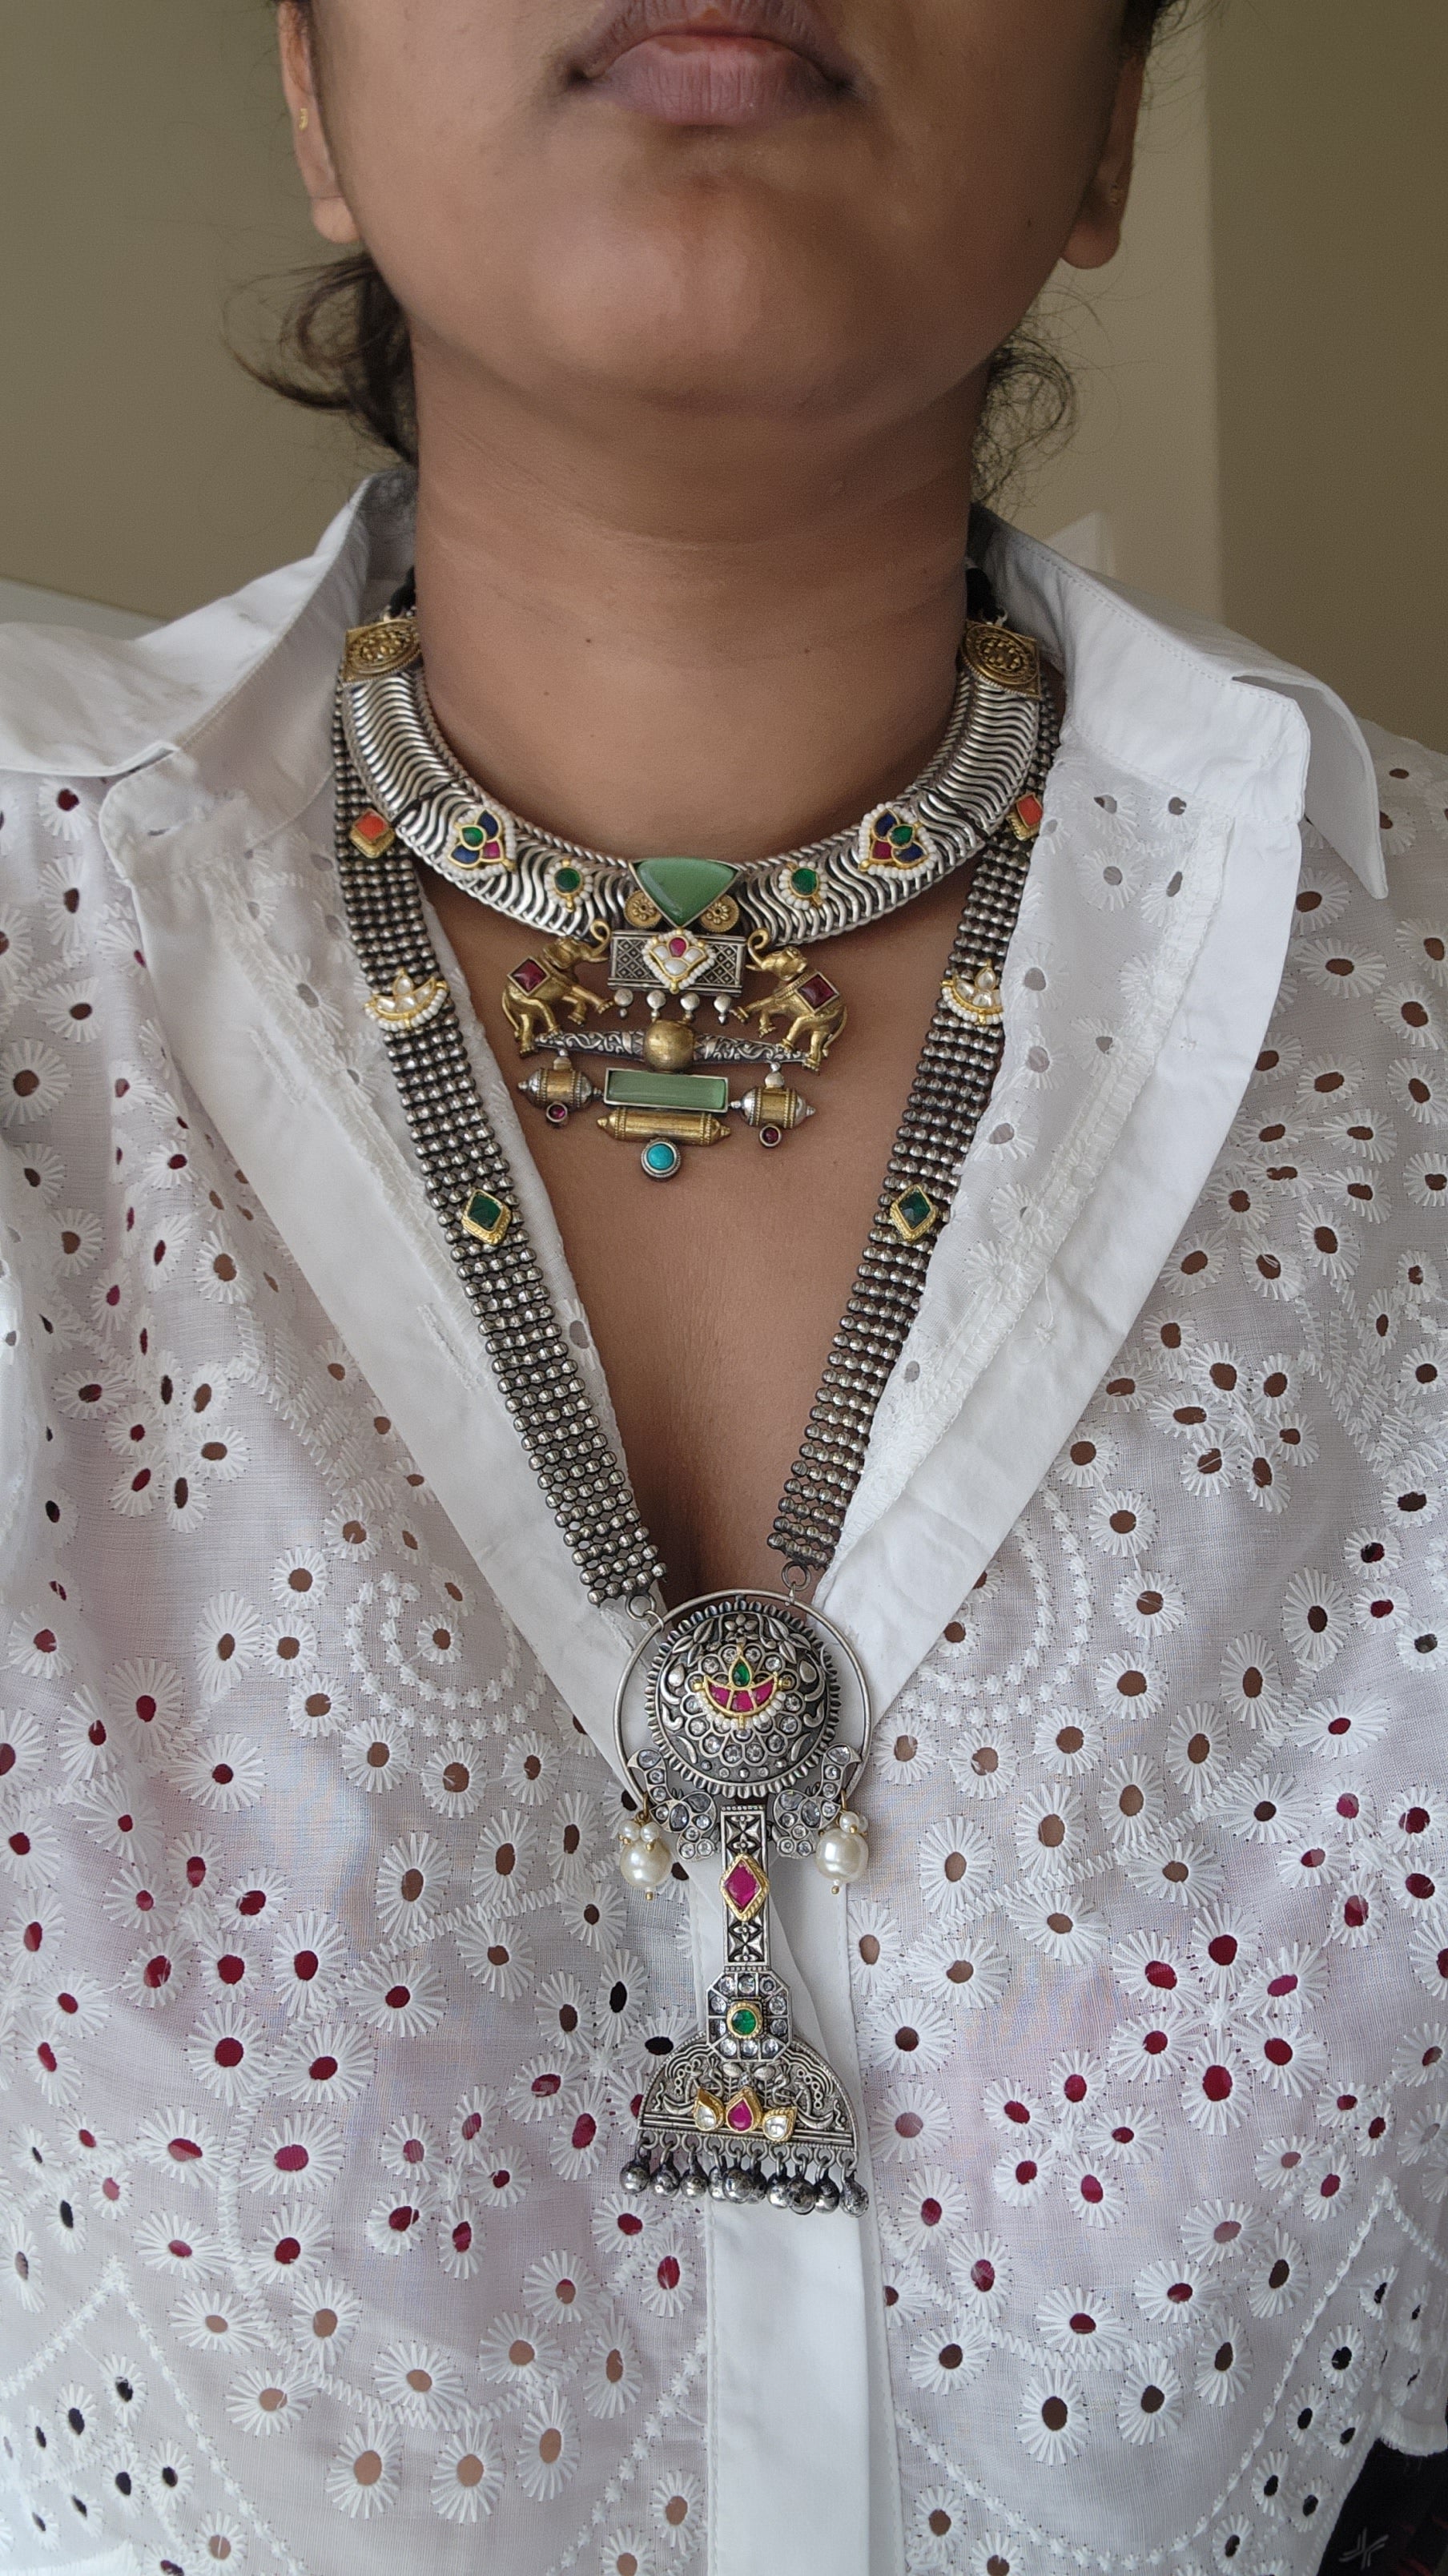 Maria fusion pendant necklace set